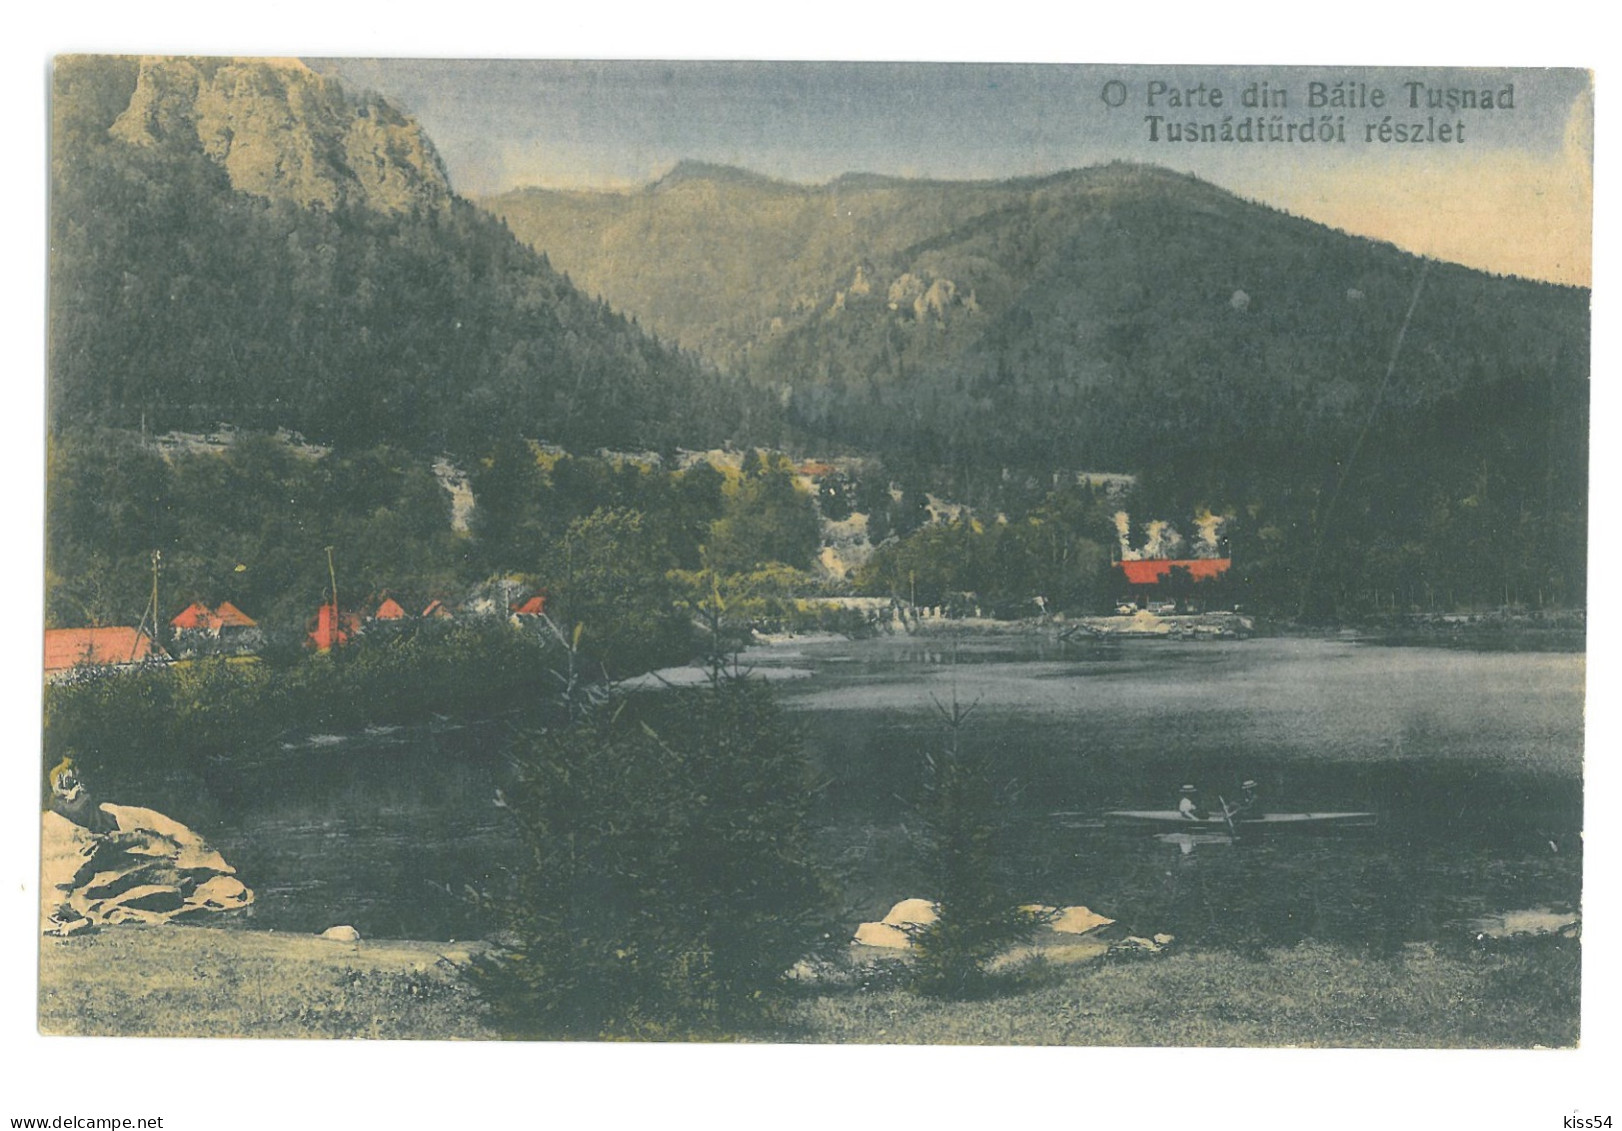 RO 82 - 18410 TUSNAD, Harghita, Panorama, Romania - Old Postcard - Unused - Romania